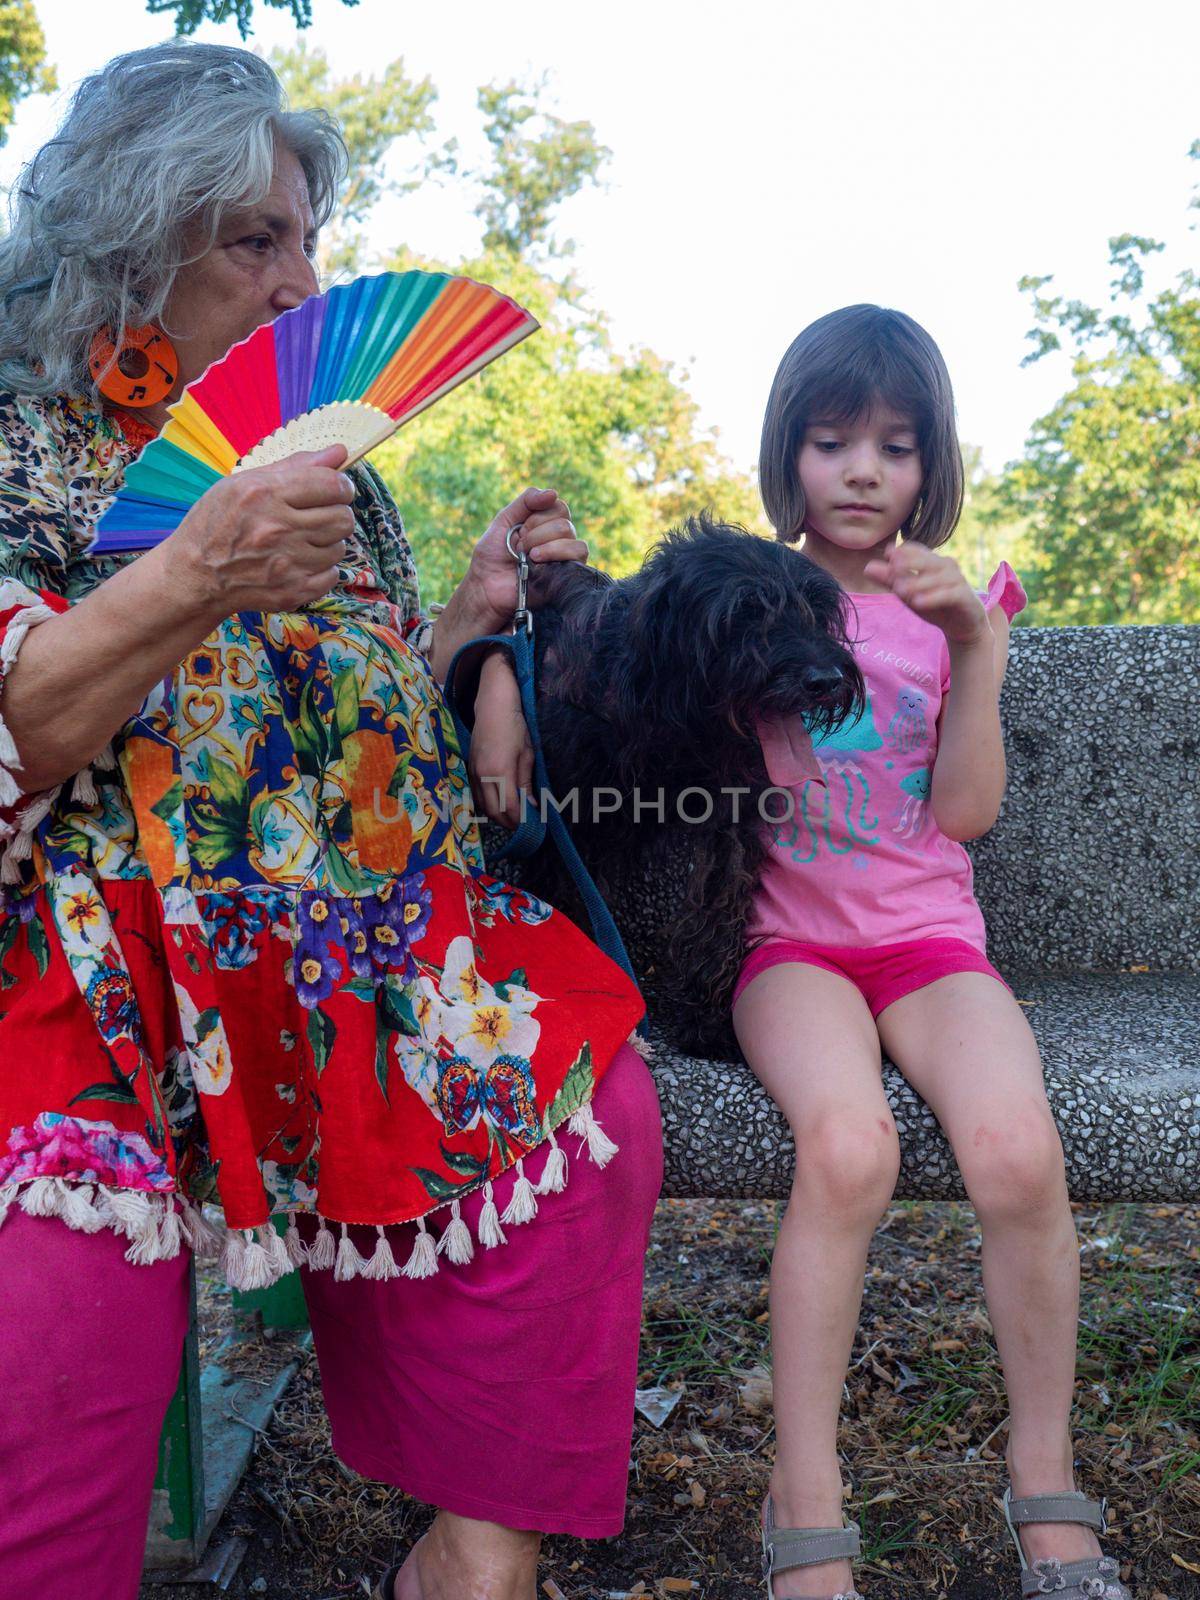 grandma , granddaughter and dog enjoying outdoors on a bench by verbano